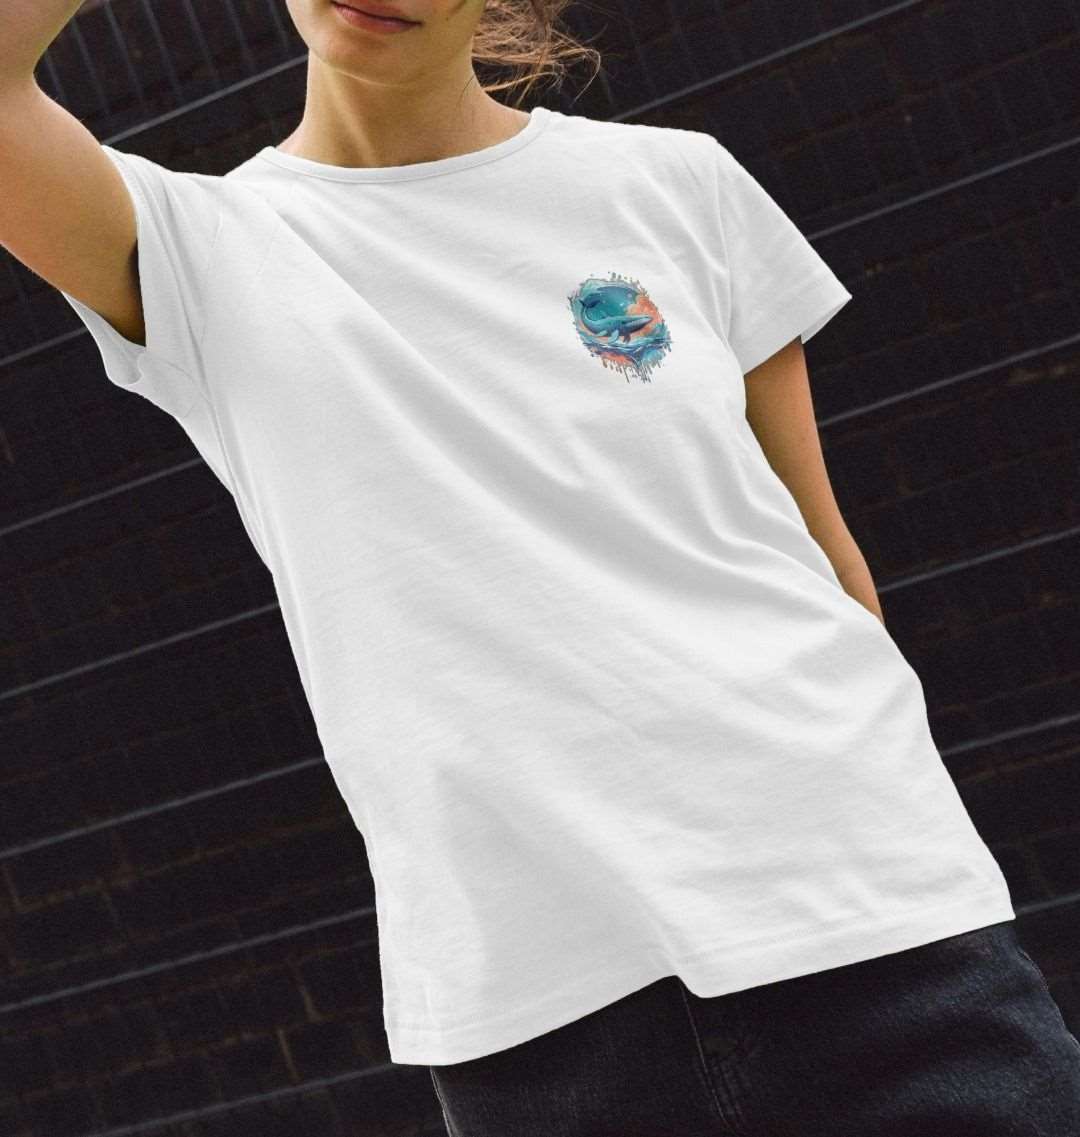 Women's blue whale design crew neck organic cotton t-shirt - Premium Eco Chic Printed T-shirt from Eco Threadz - Just £20! Shop now at Eco Threadz